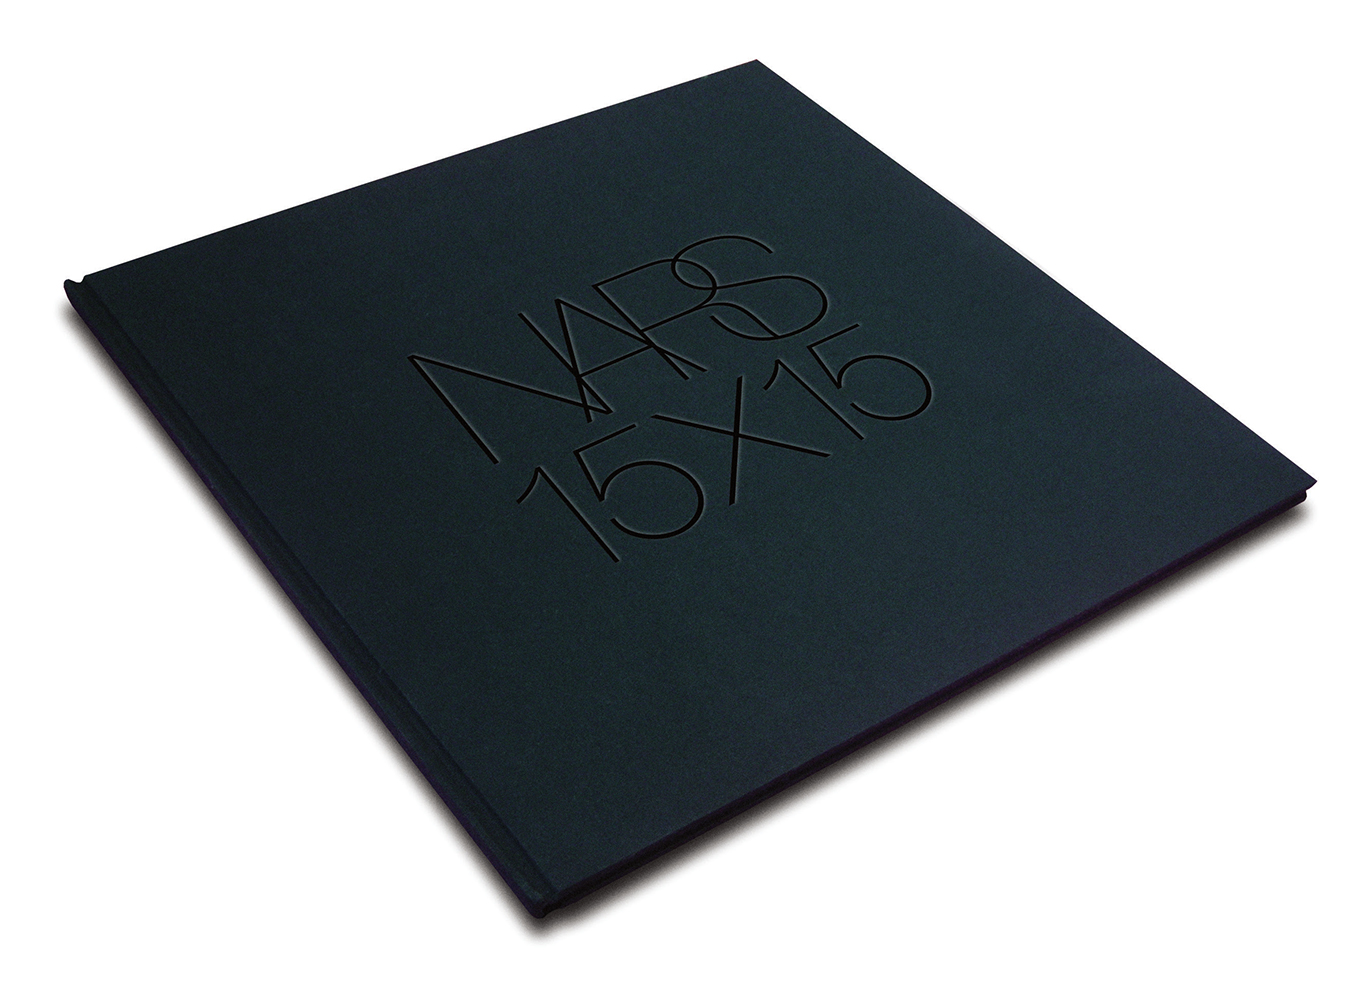 Nuvo Magazine: NARS Portrait Book